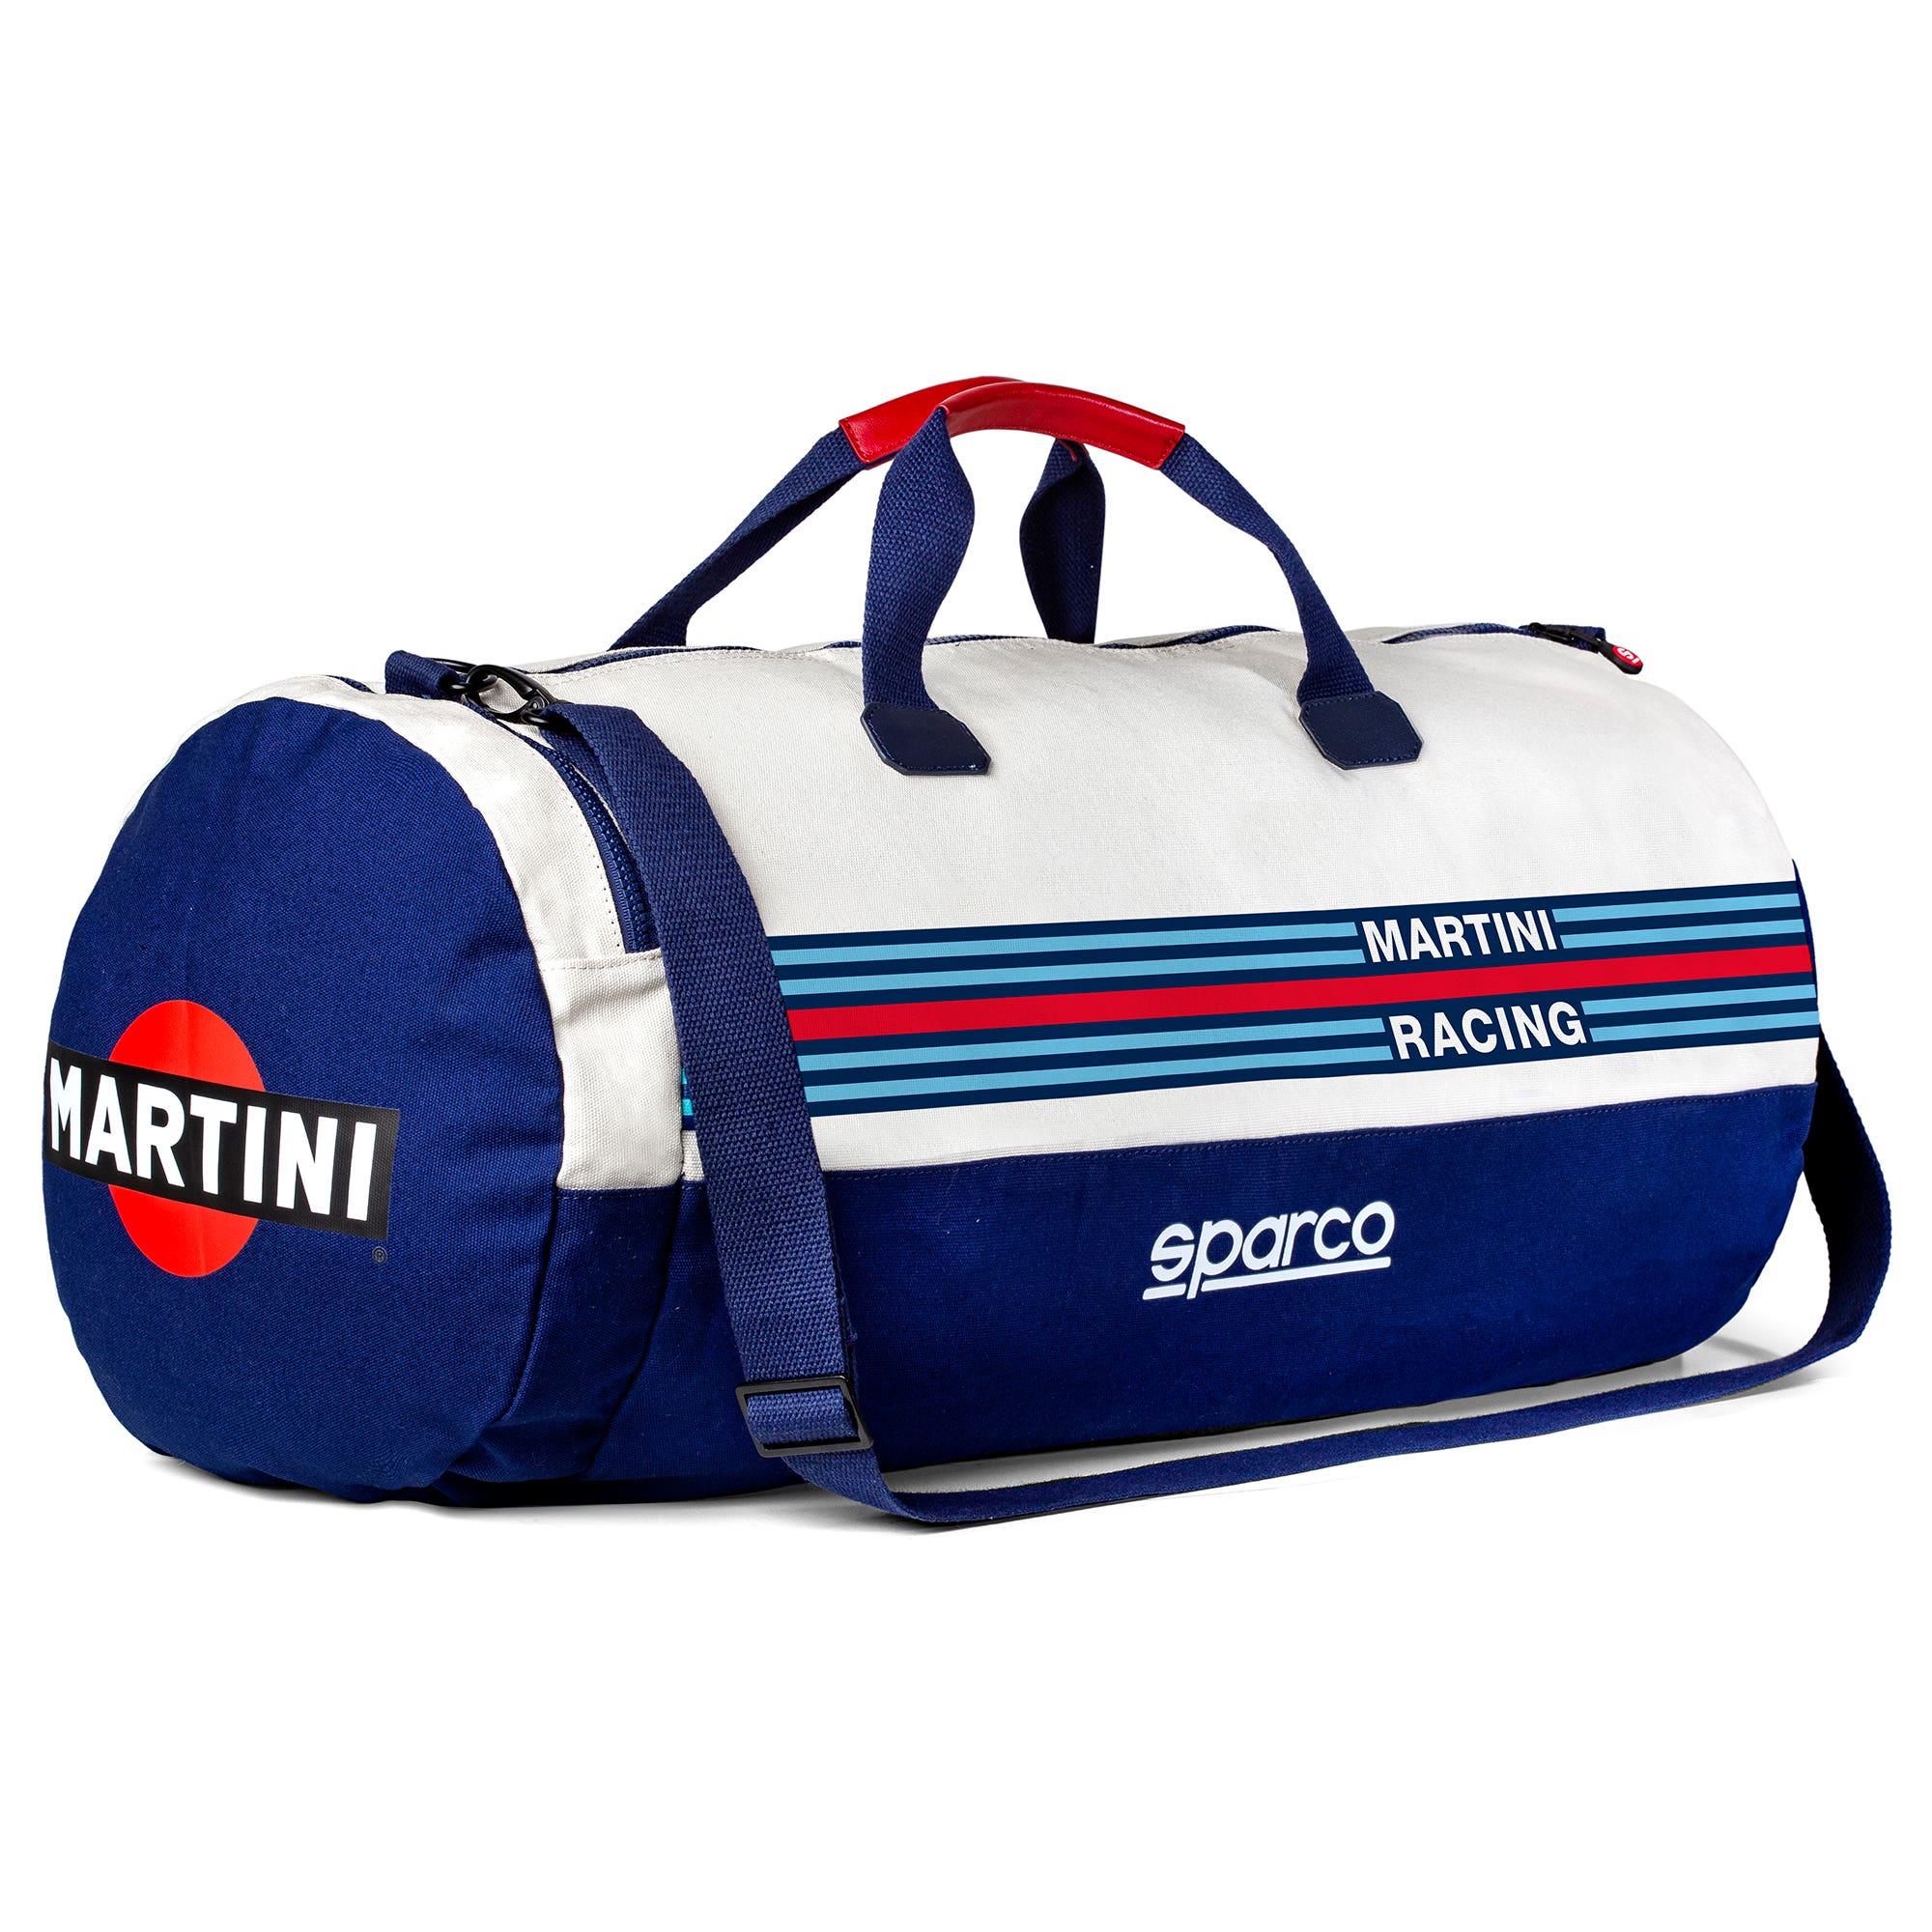 SPORTBAG MARTINI RACING - Sparco Shop